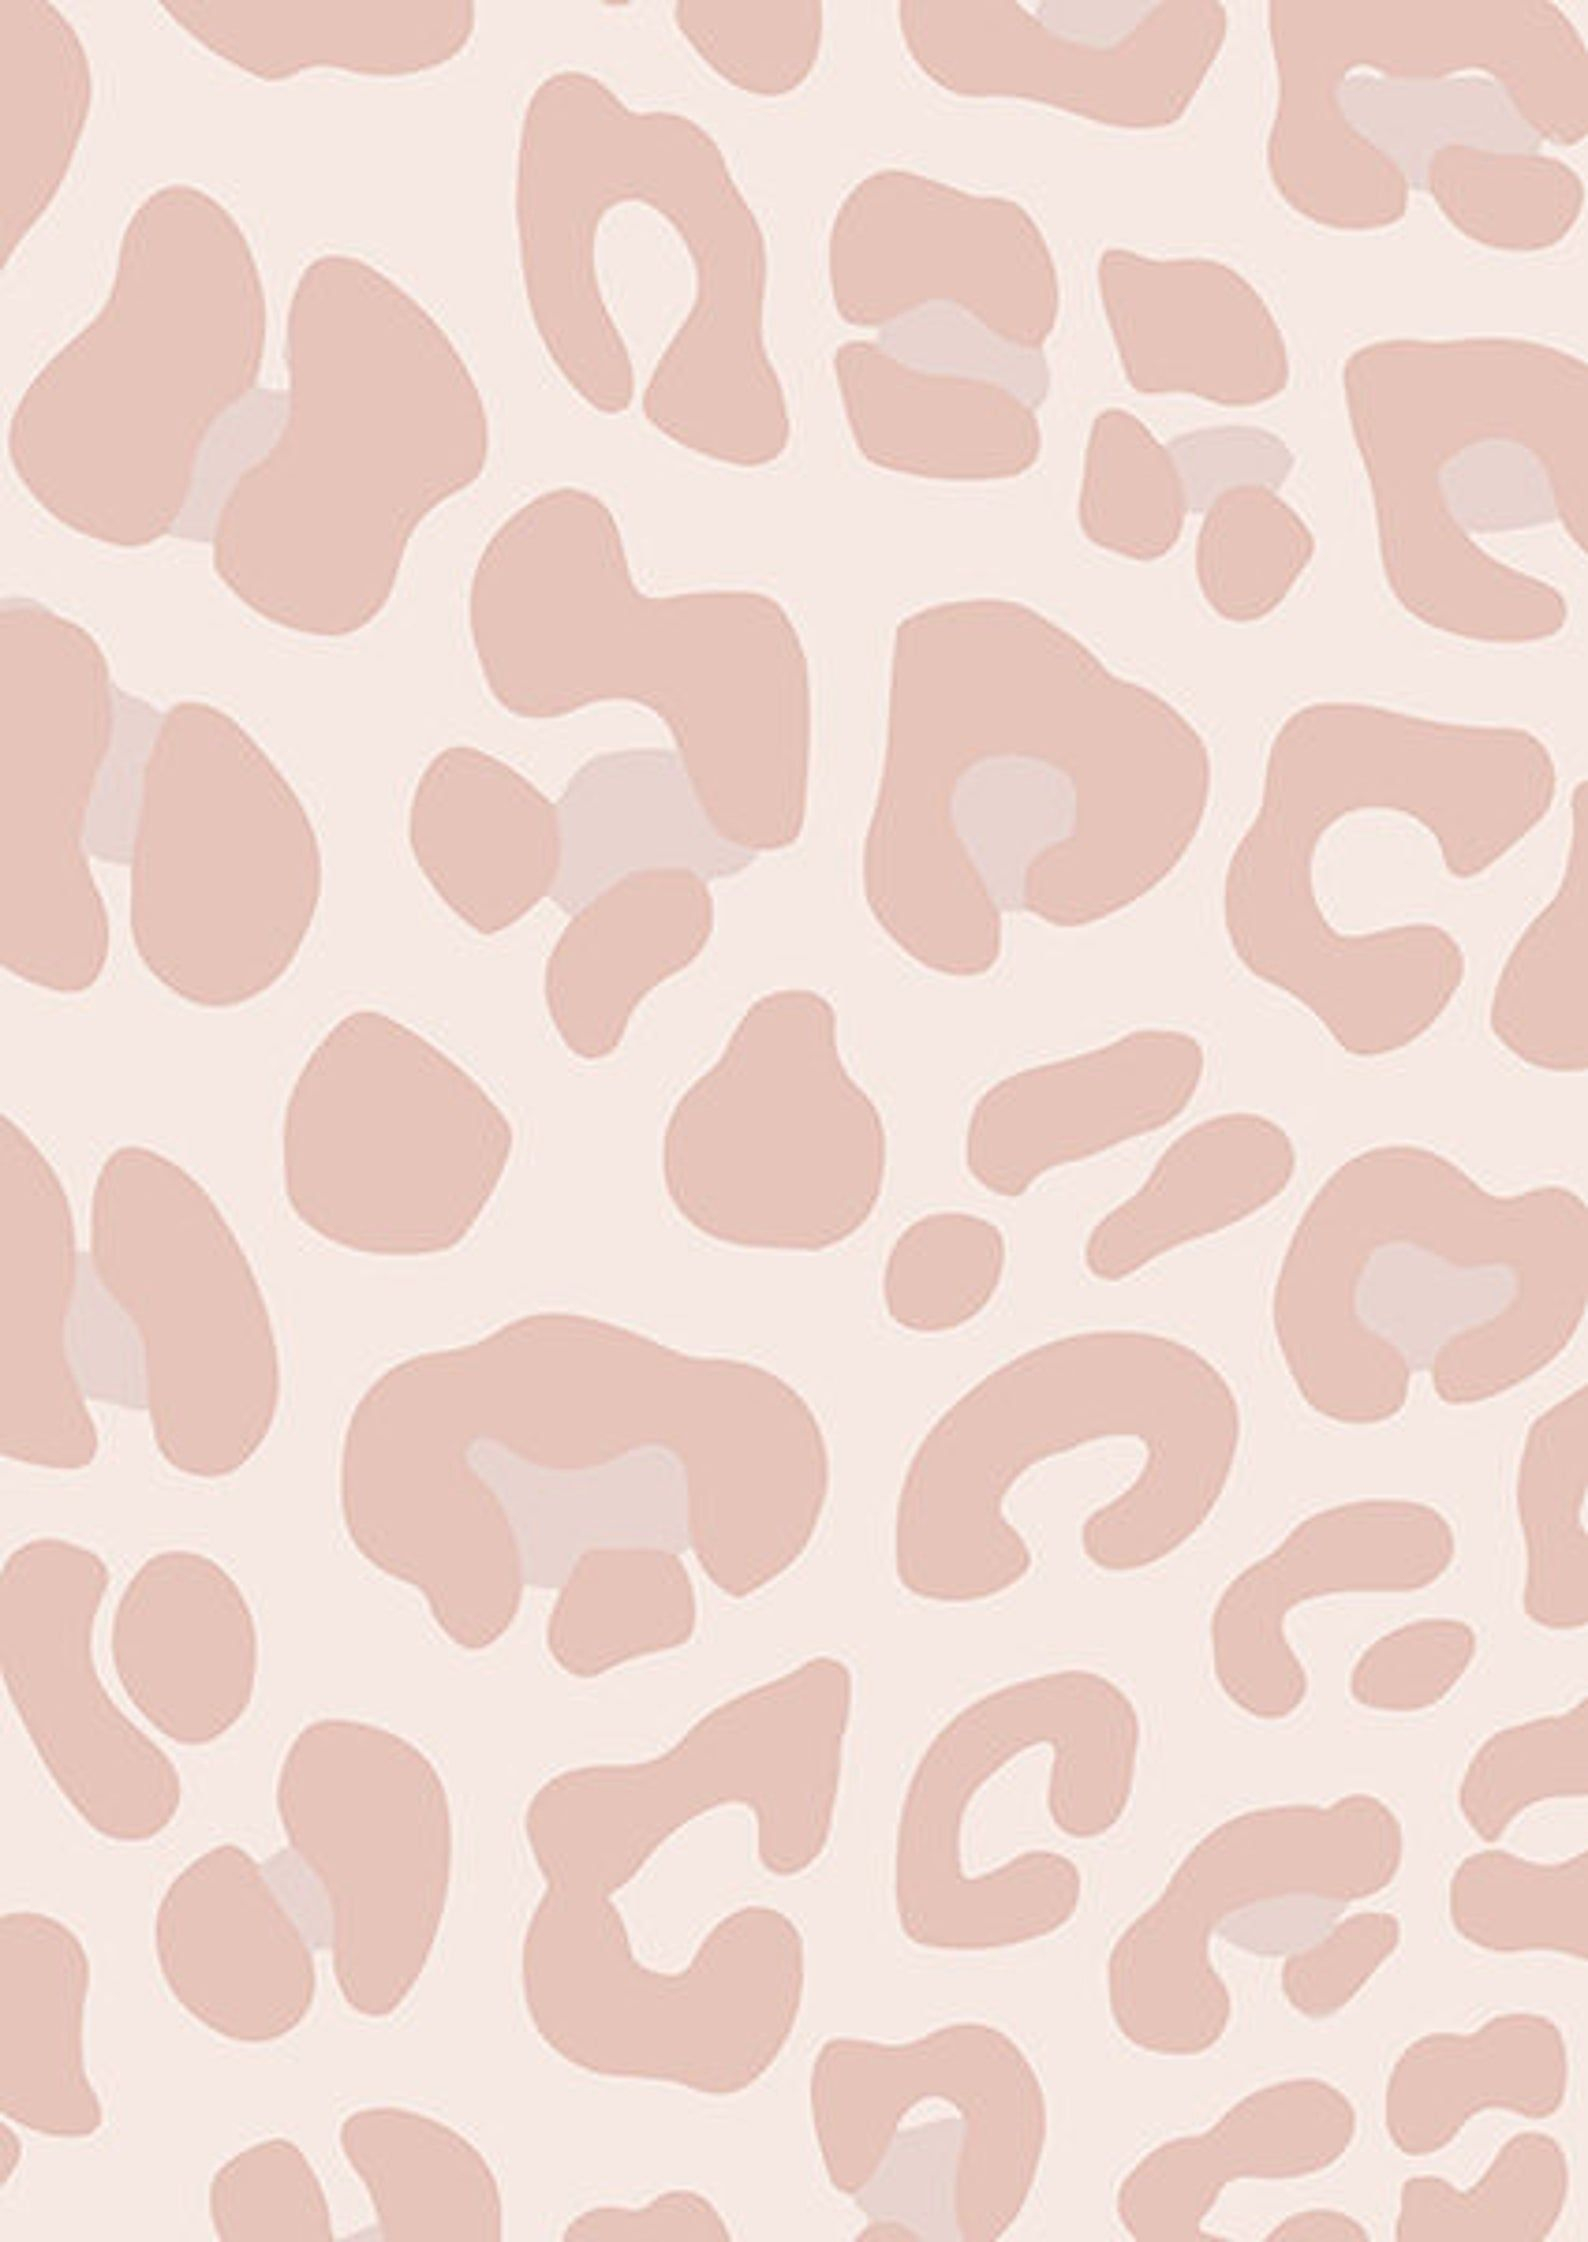 1588x2242 Pink Leopard Print Etsy | Cheetah print wallpaper, Leopard print background, Cute patterns wallpaper